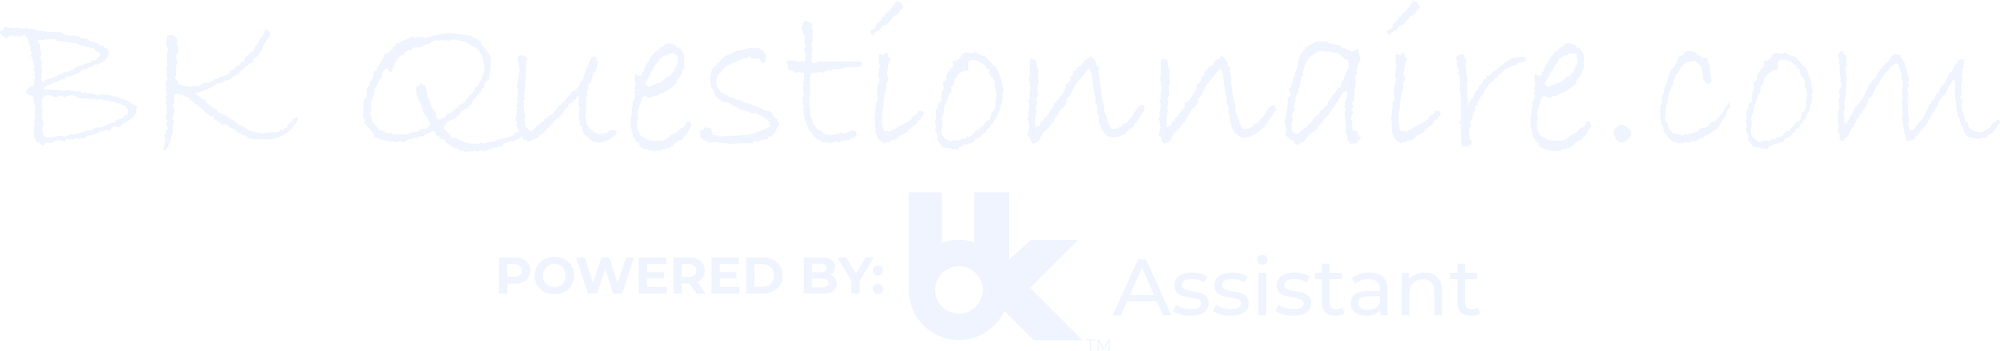 BK logo white